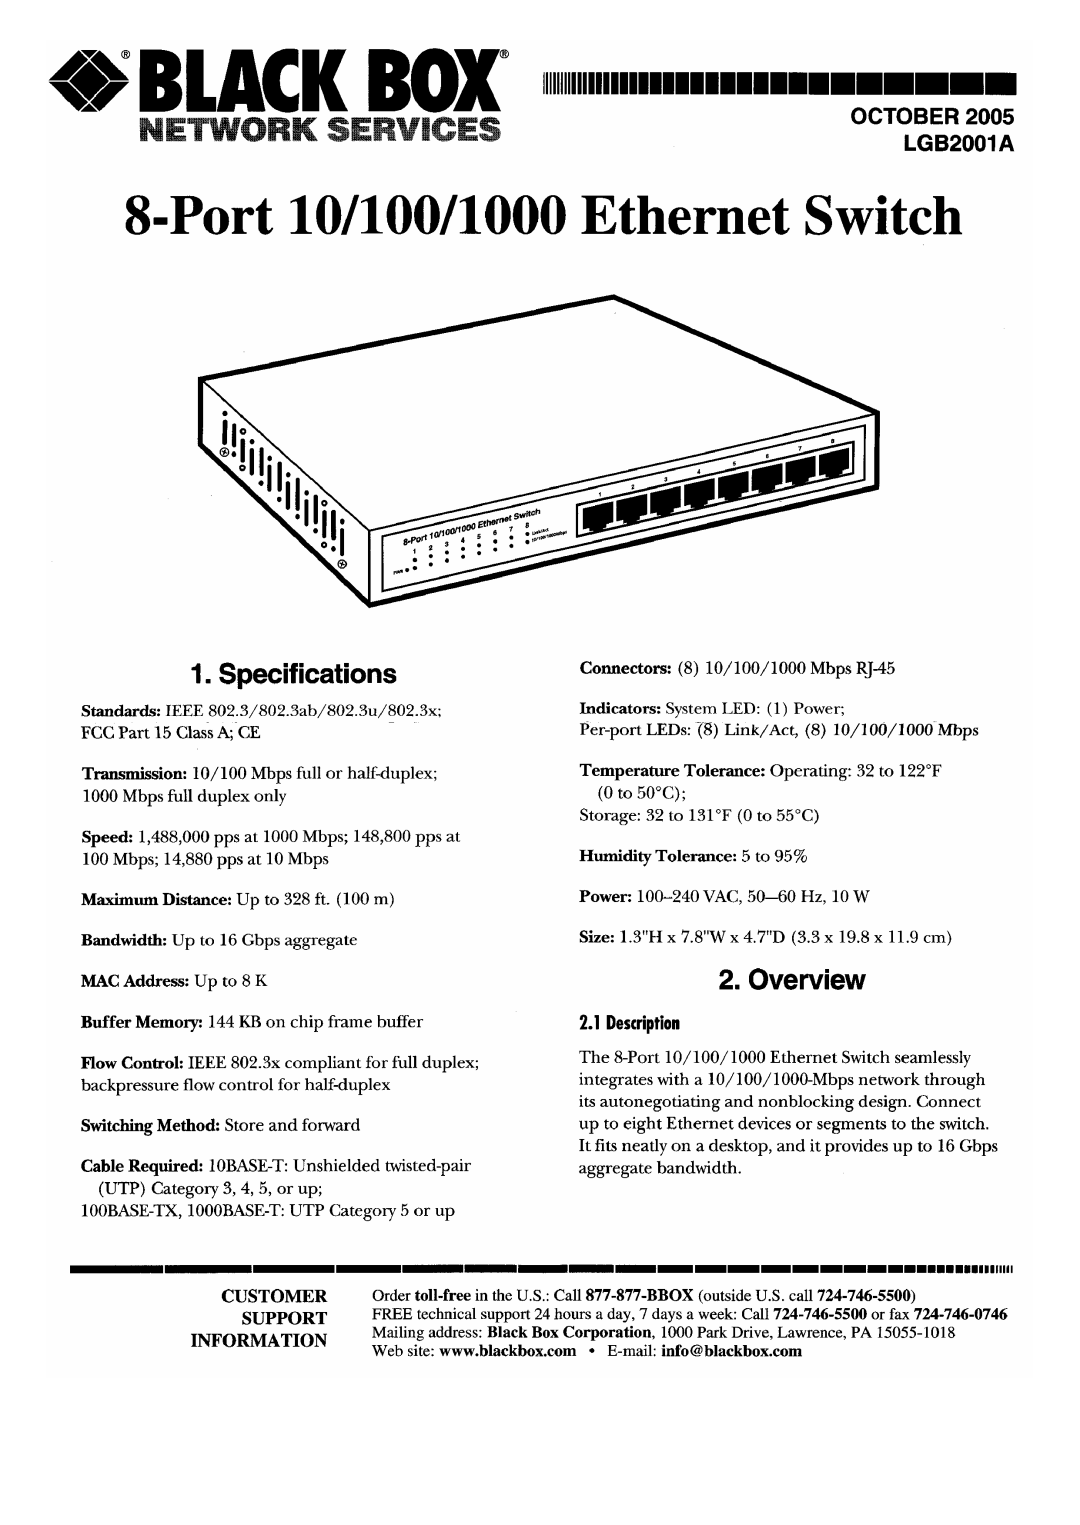 Black Box 8-port 10/100/1000 ethernet switch, lgb2001a manual 